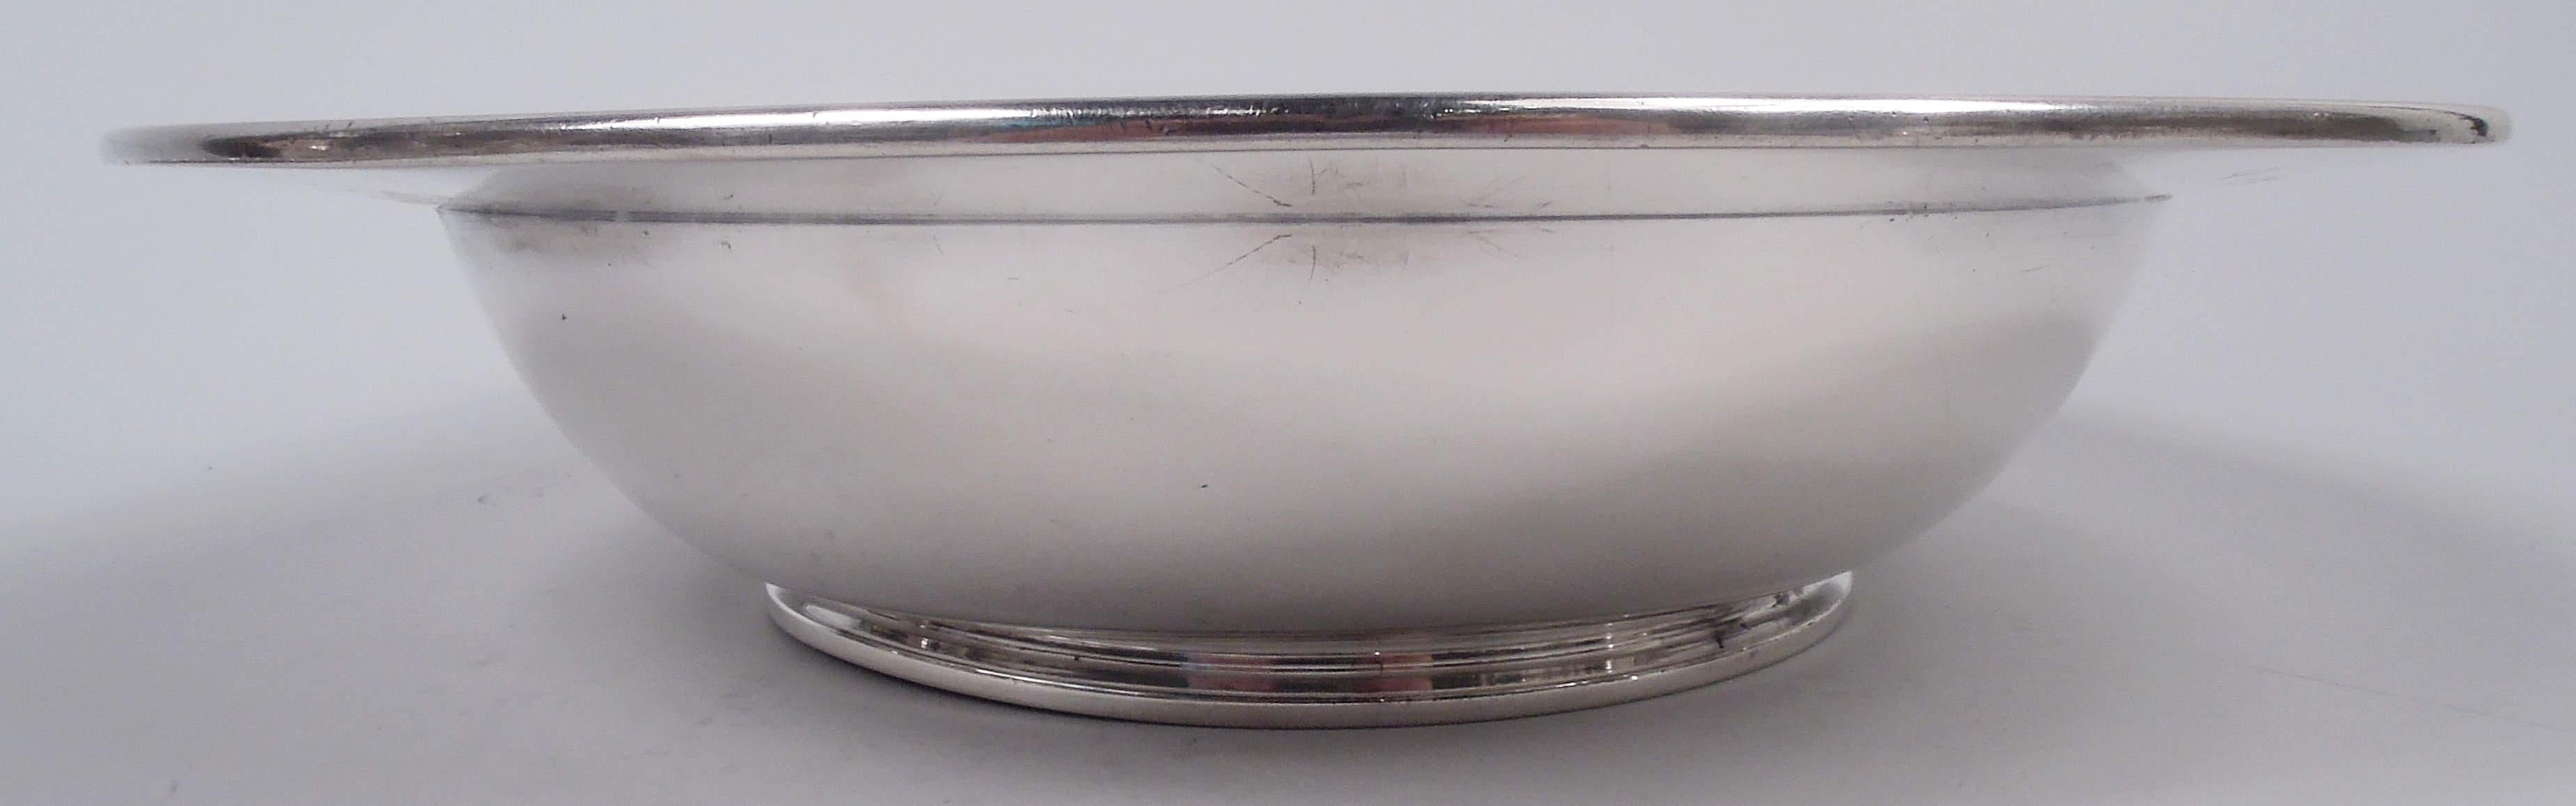 Regency Revival Antique Tiffany Winthrop Sterling Silver Bowl For Sale